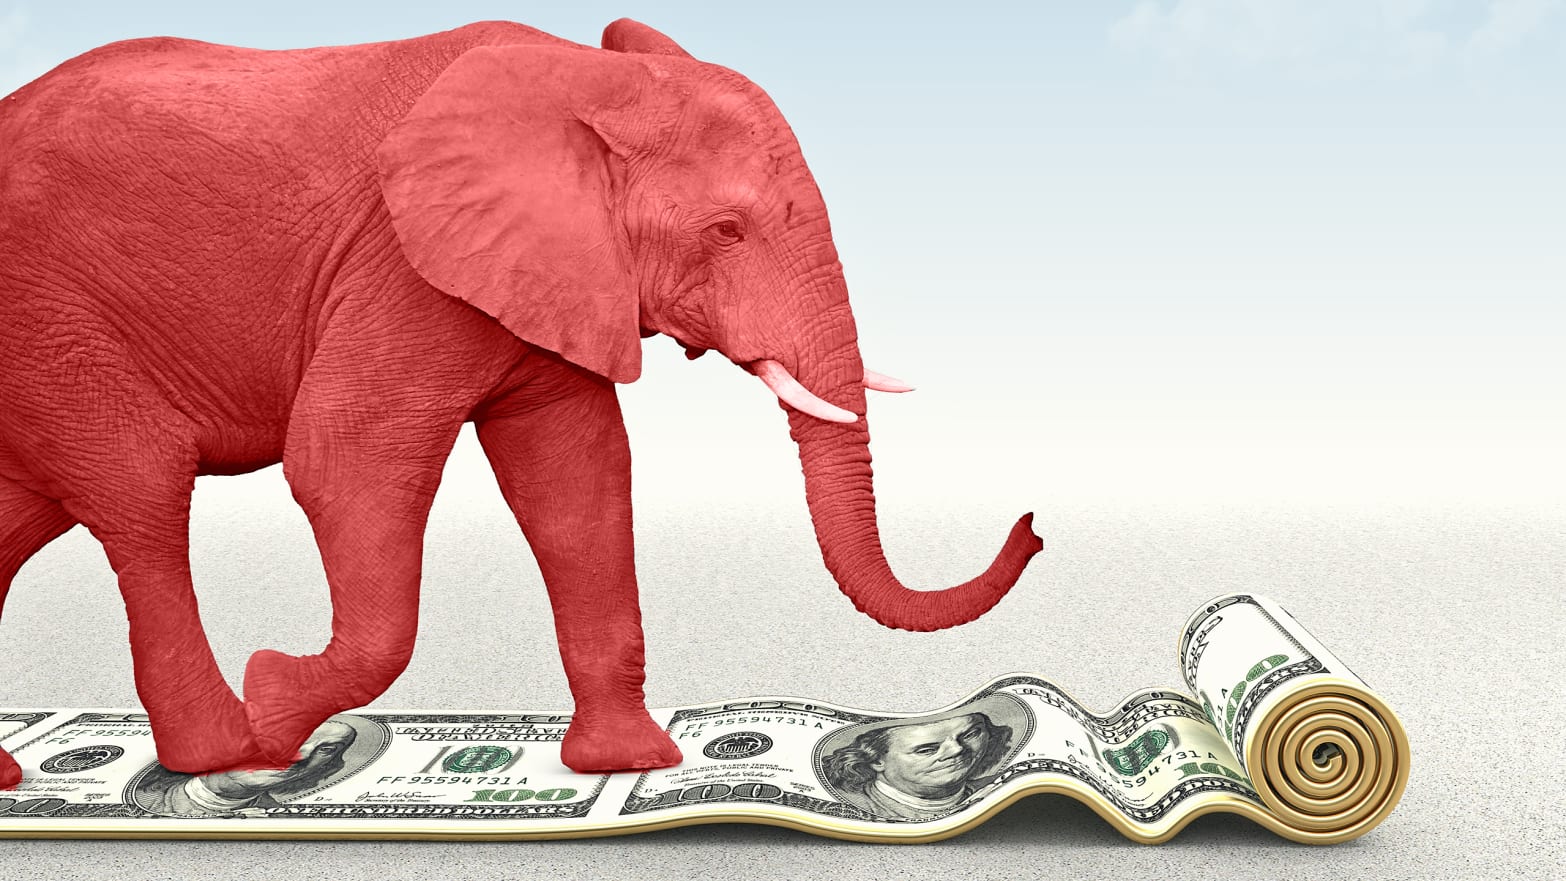 Republican Lawmakers’ Posh Hideaway Funded by Secret Corporate Cash